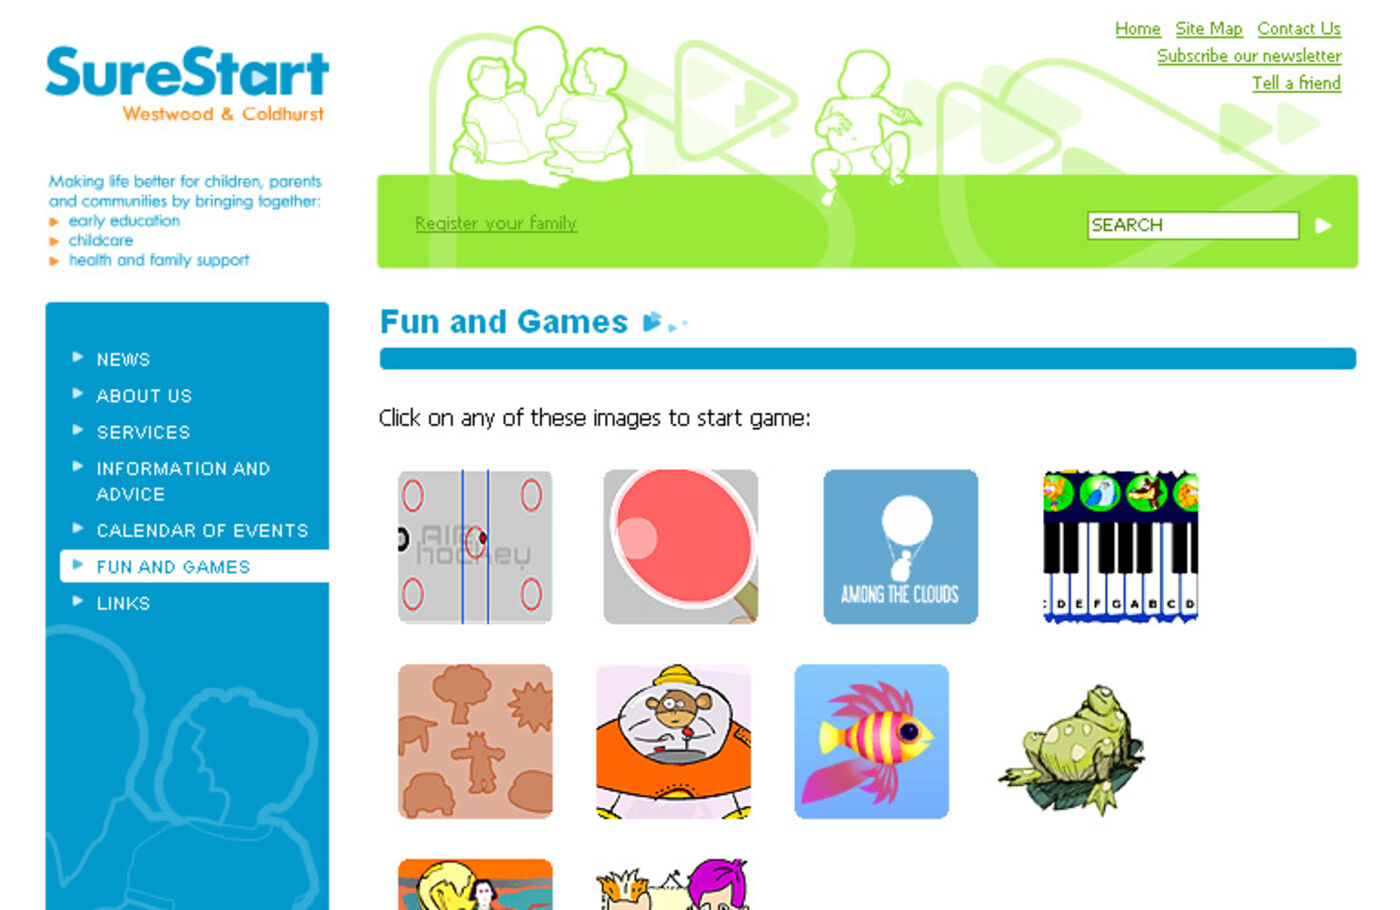 Sure Start Westwood & Coldhurst Fun and games - SureStart